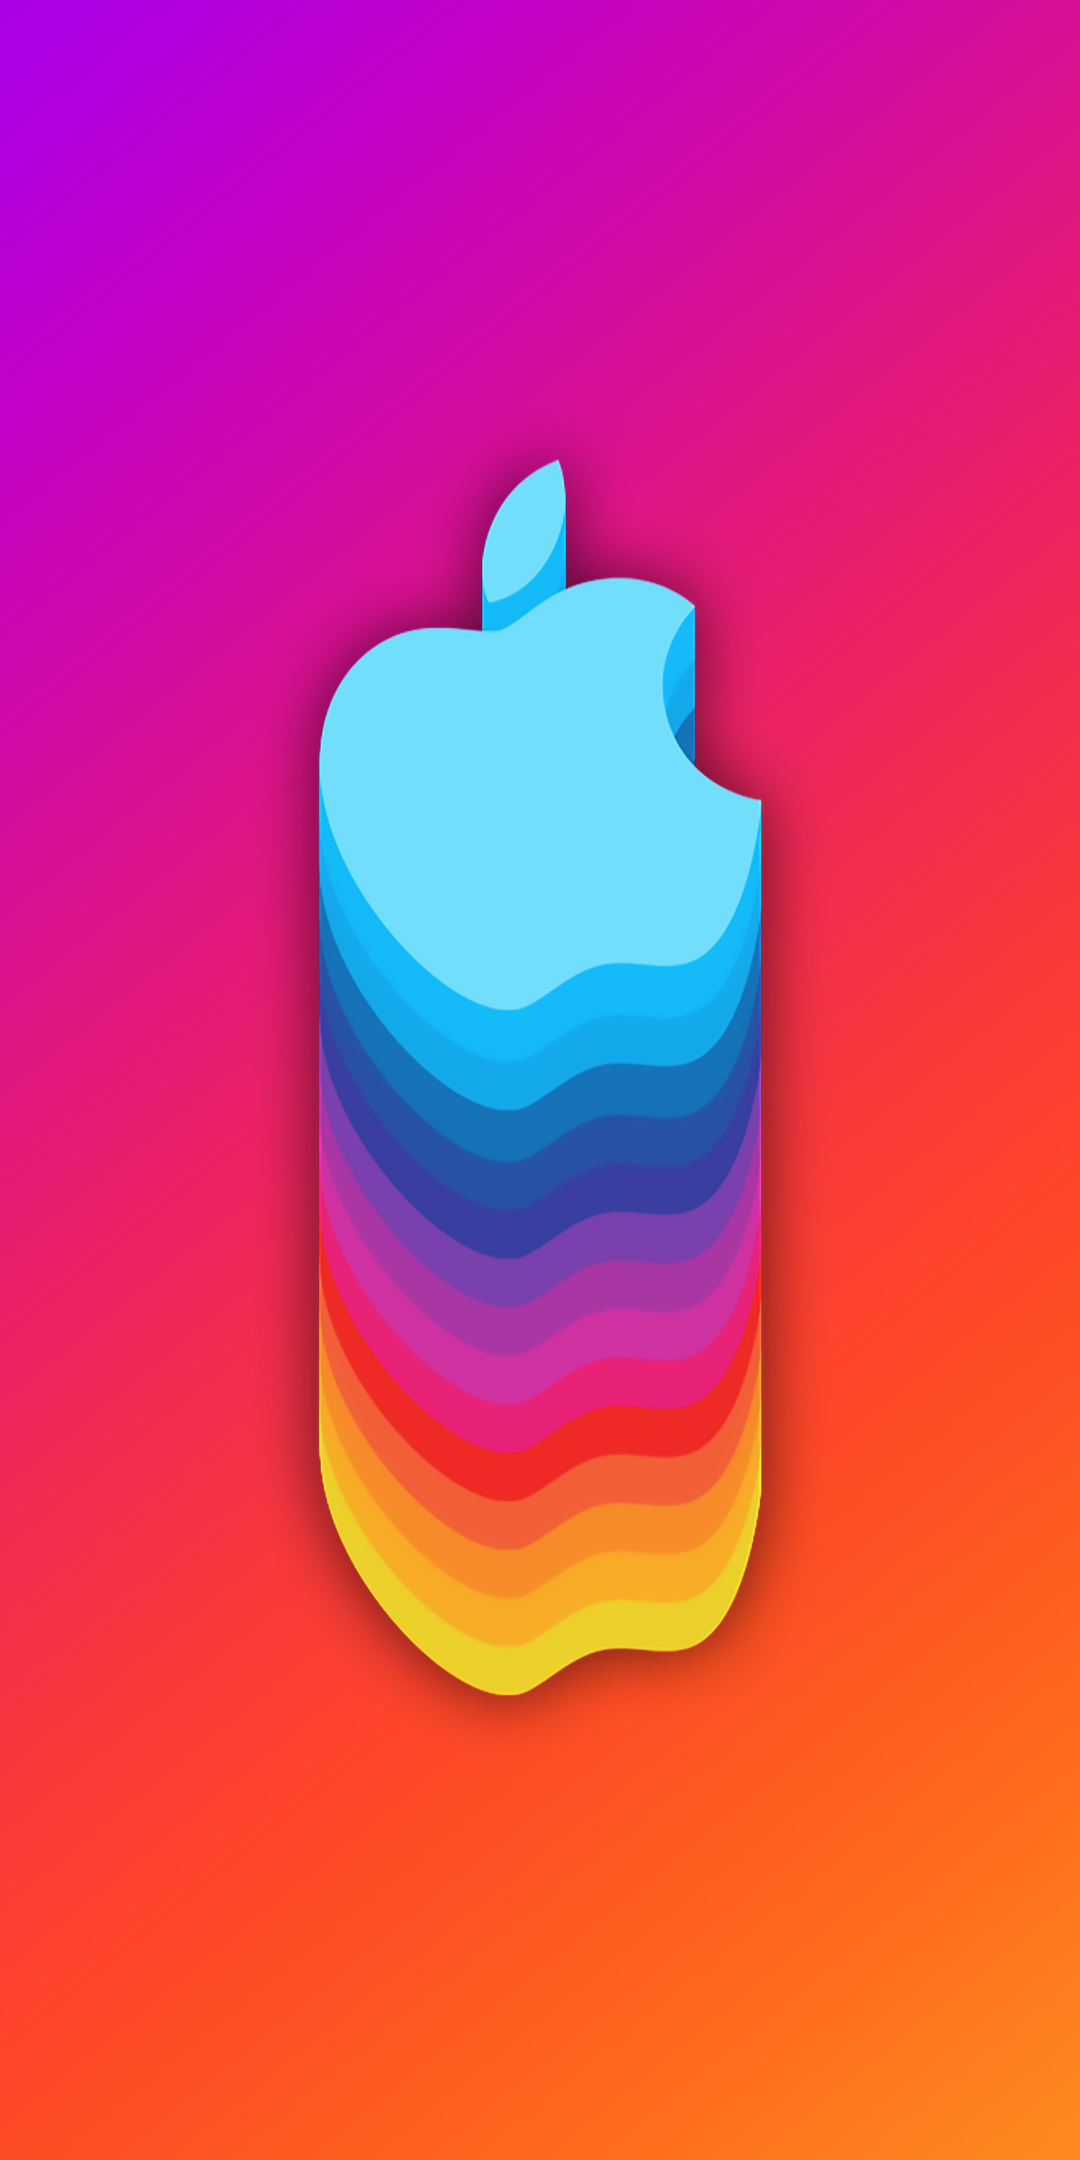 Apple's logo, material art, abstract, 1080x2160 wallpaper